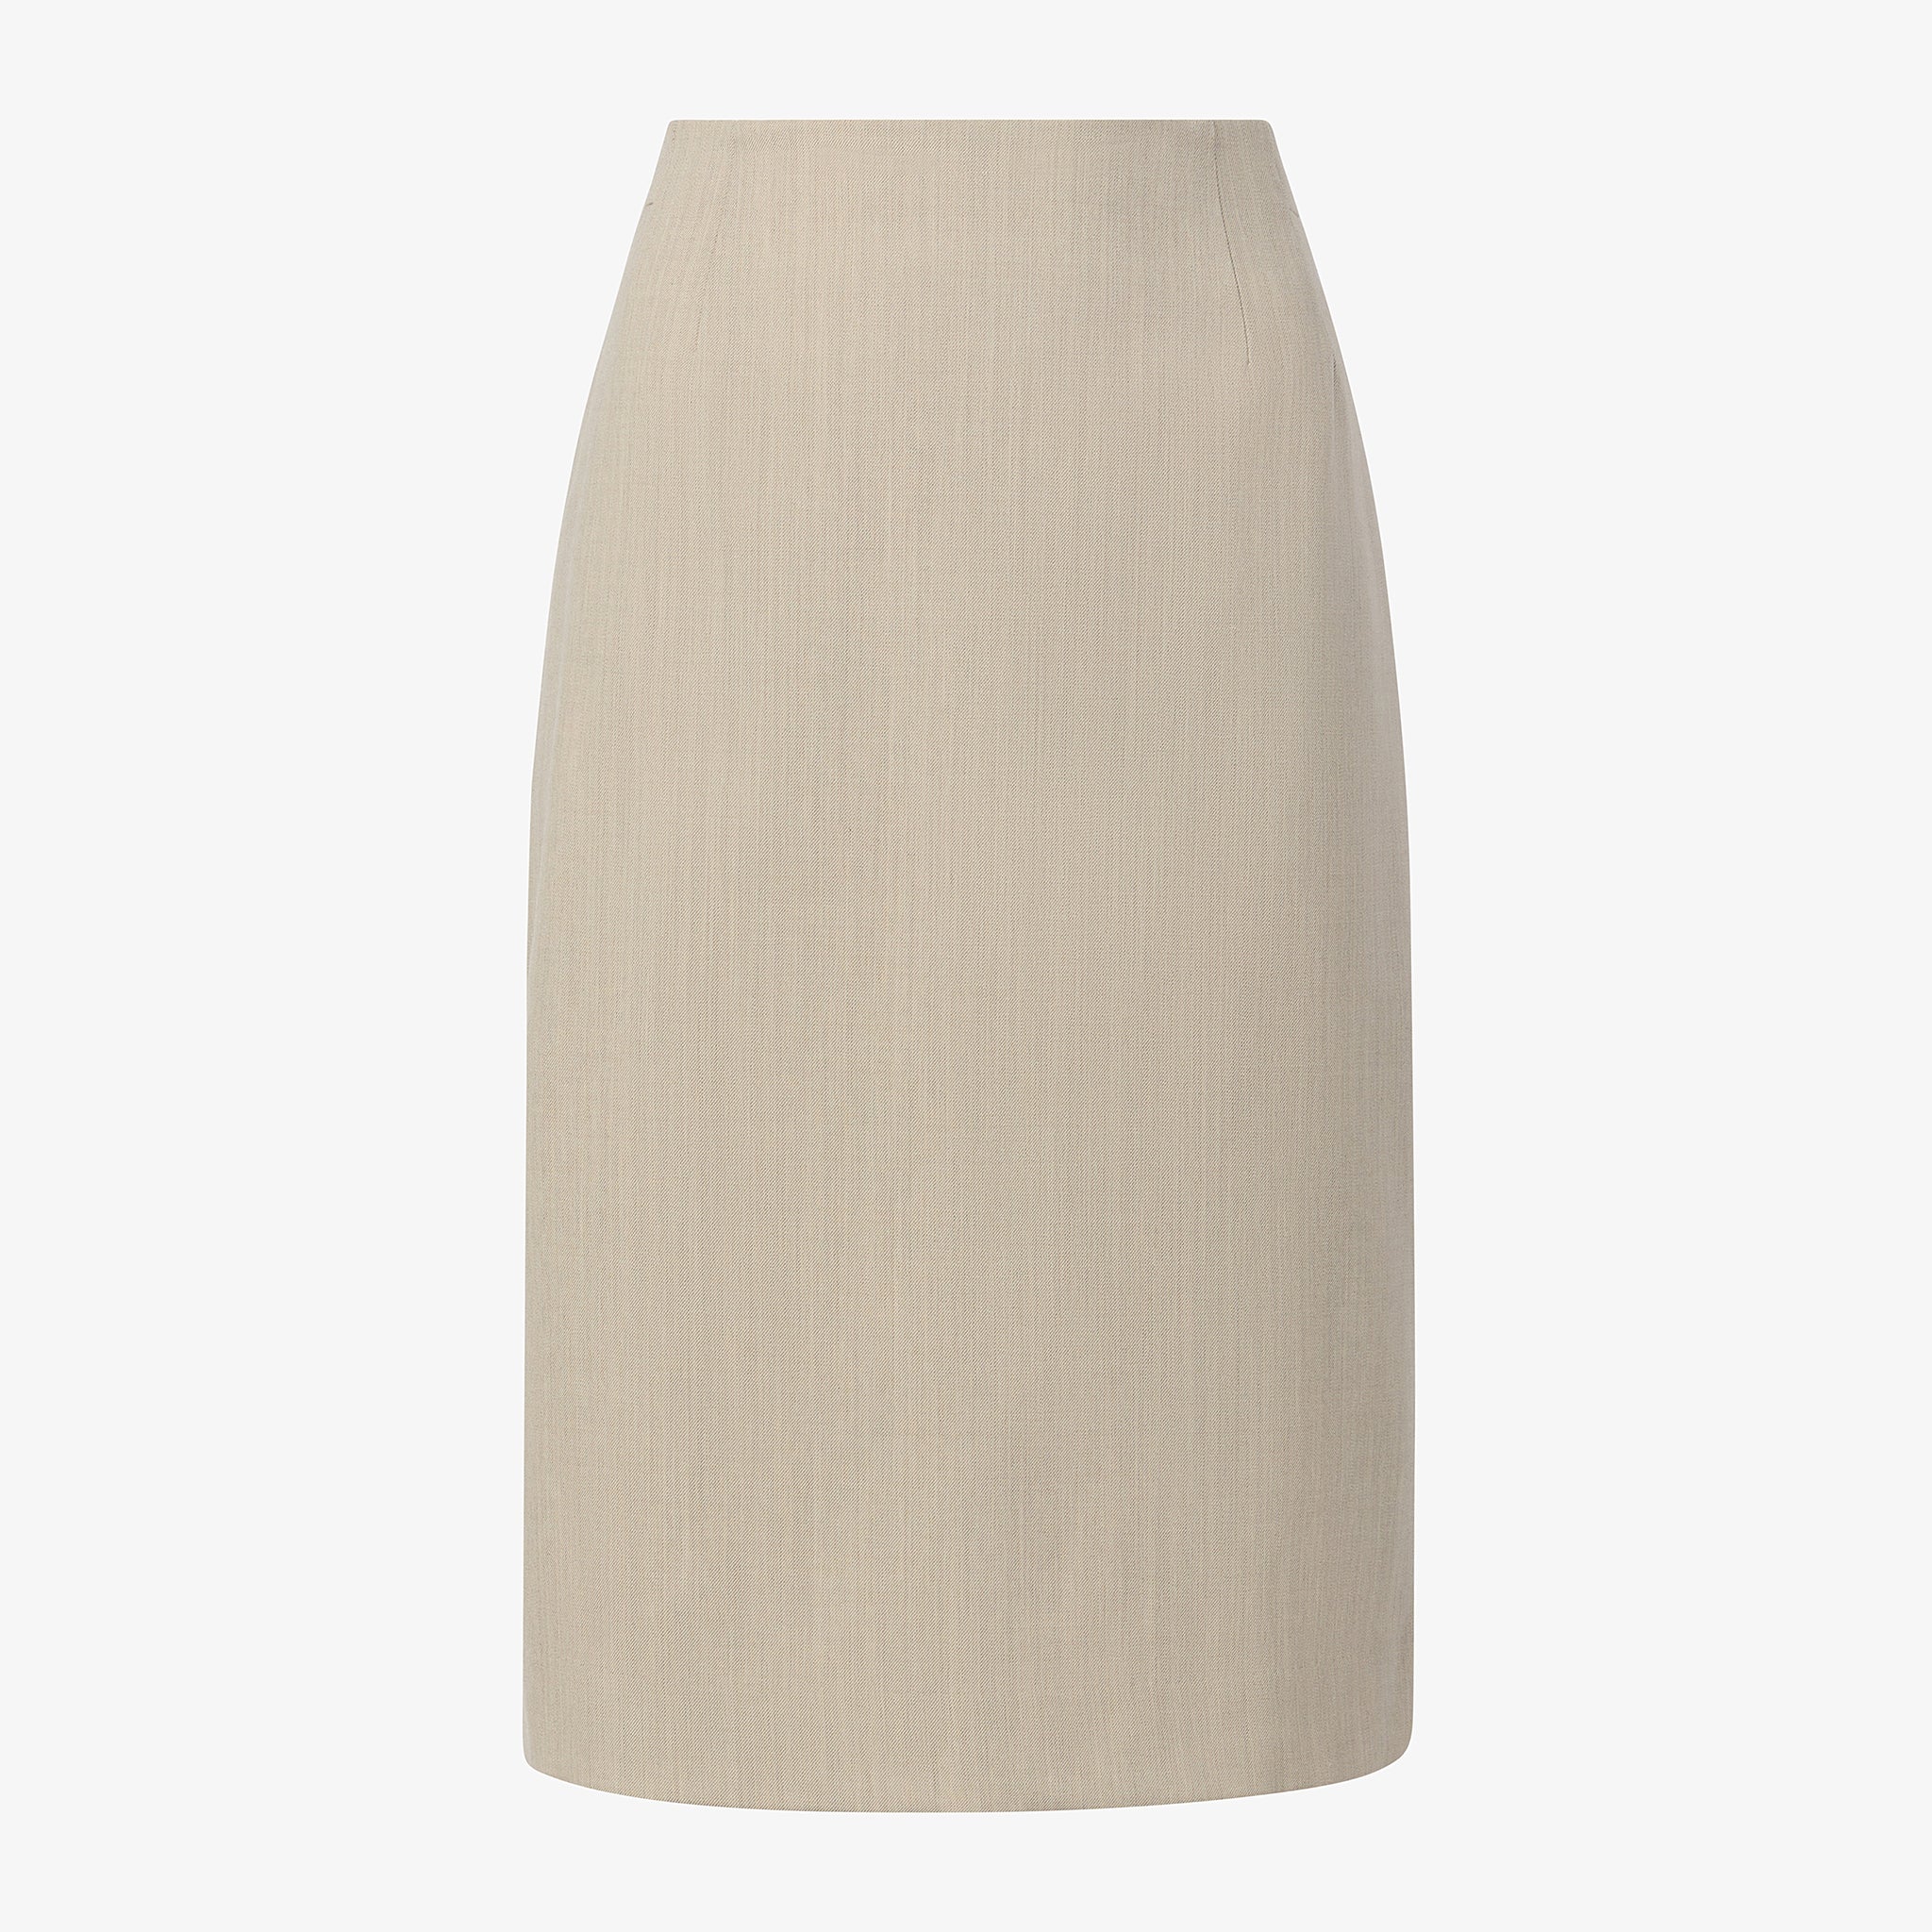 Packshot image of the Cobble Hill Skirt in Natural Melange